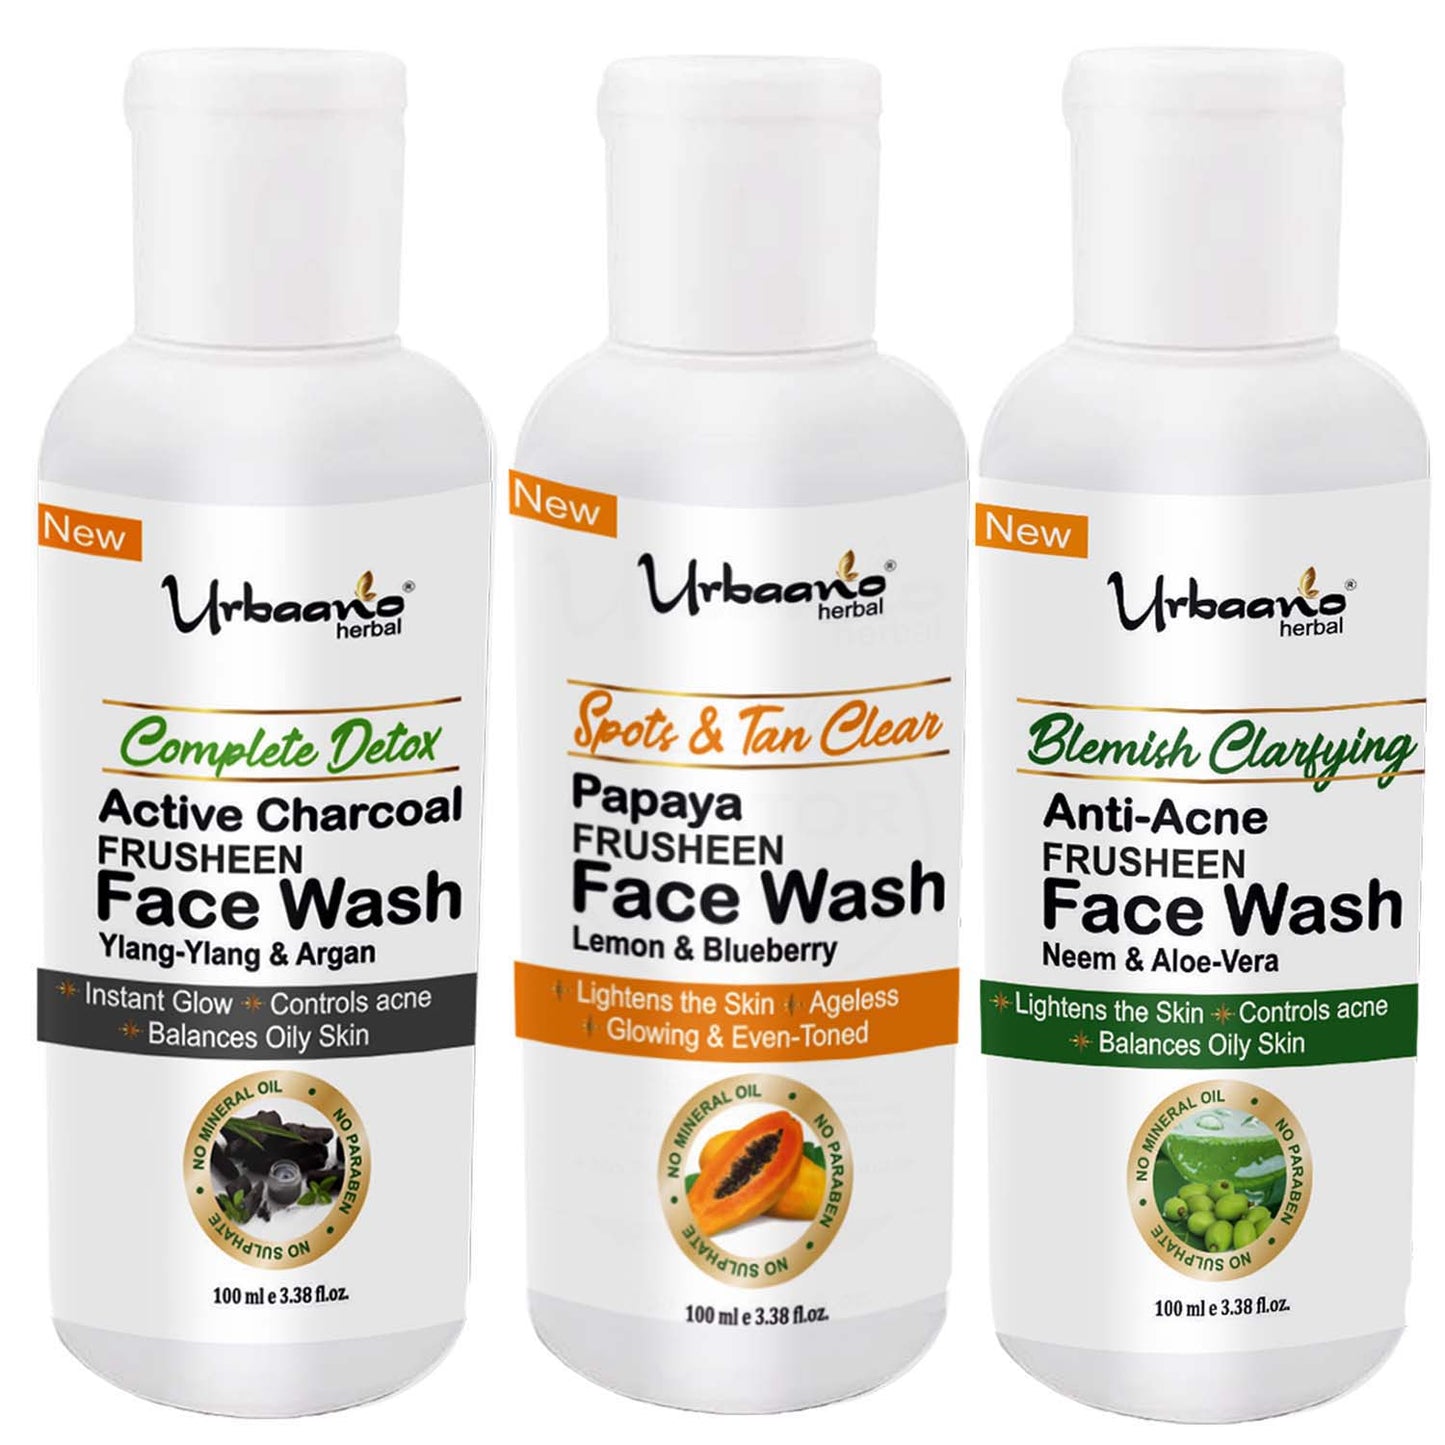 urbaano herbal frusheen face wash charcoal, anti acne, papaya for skin lightening, detox, spot & tan clear